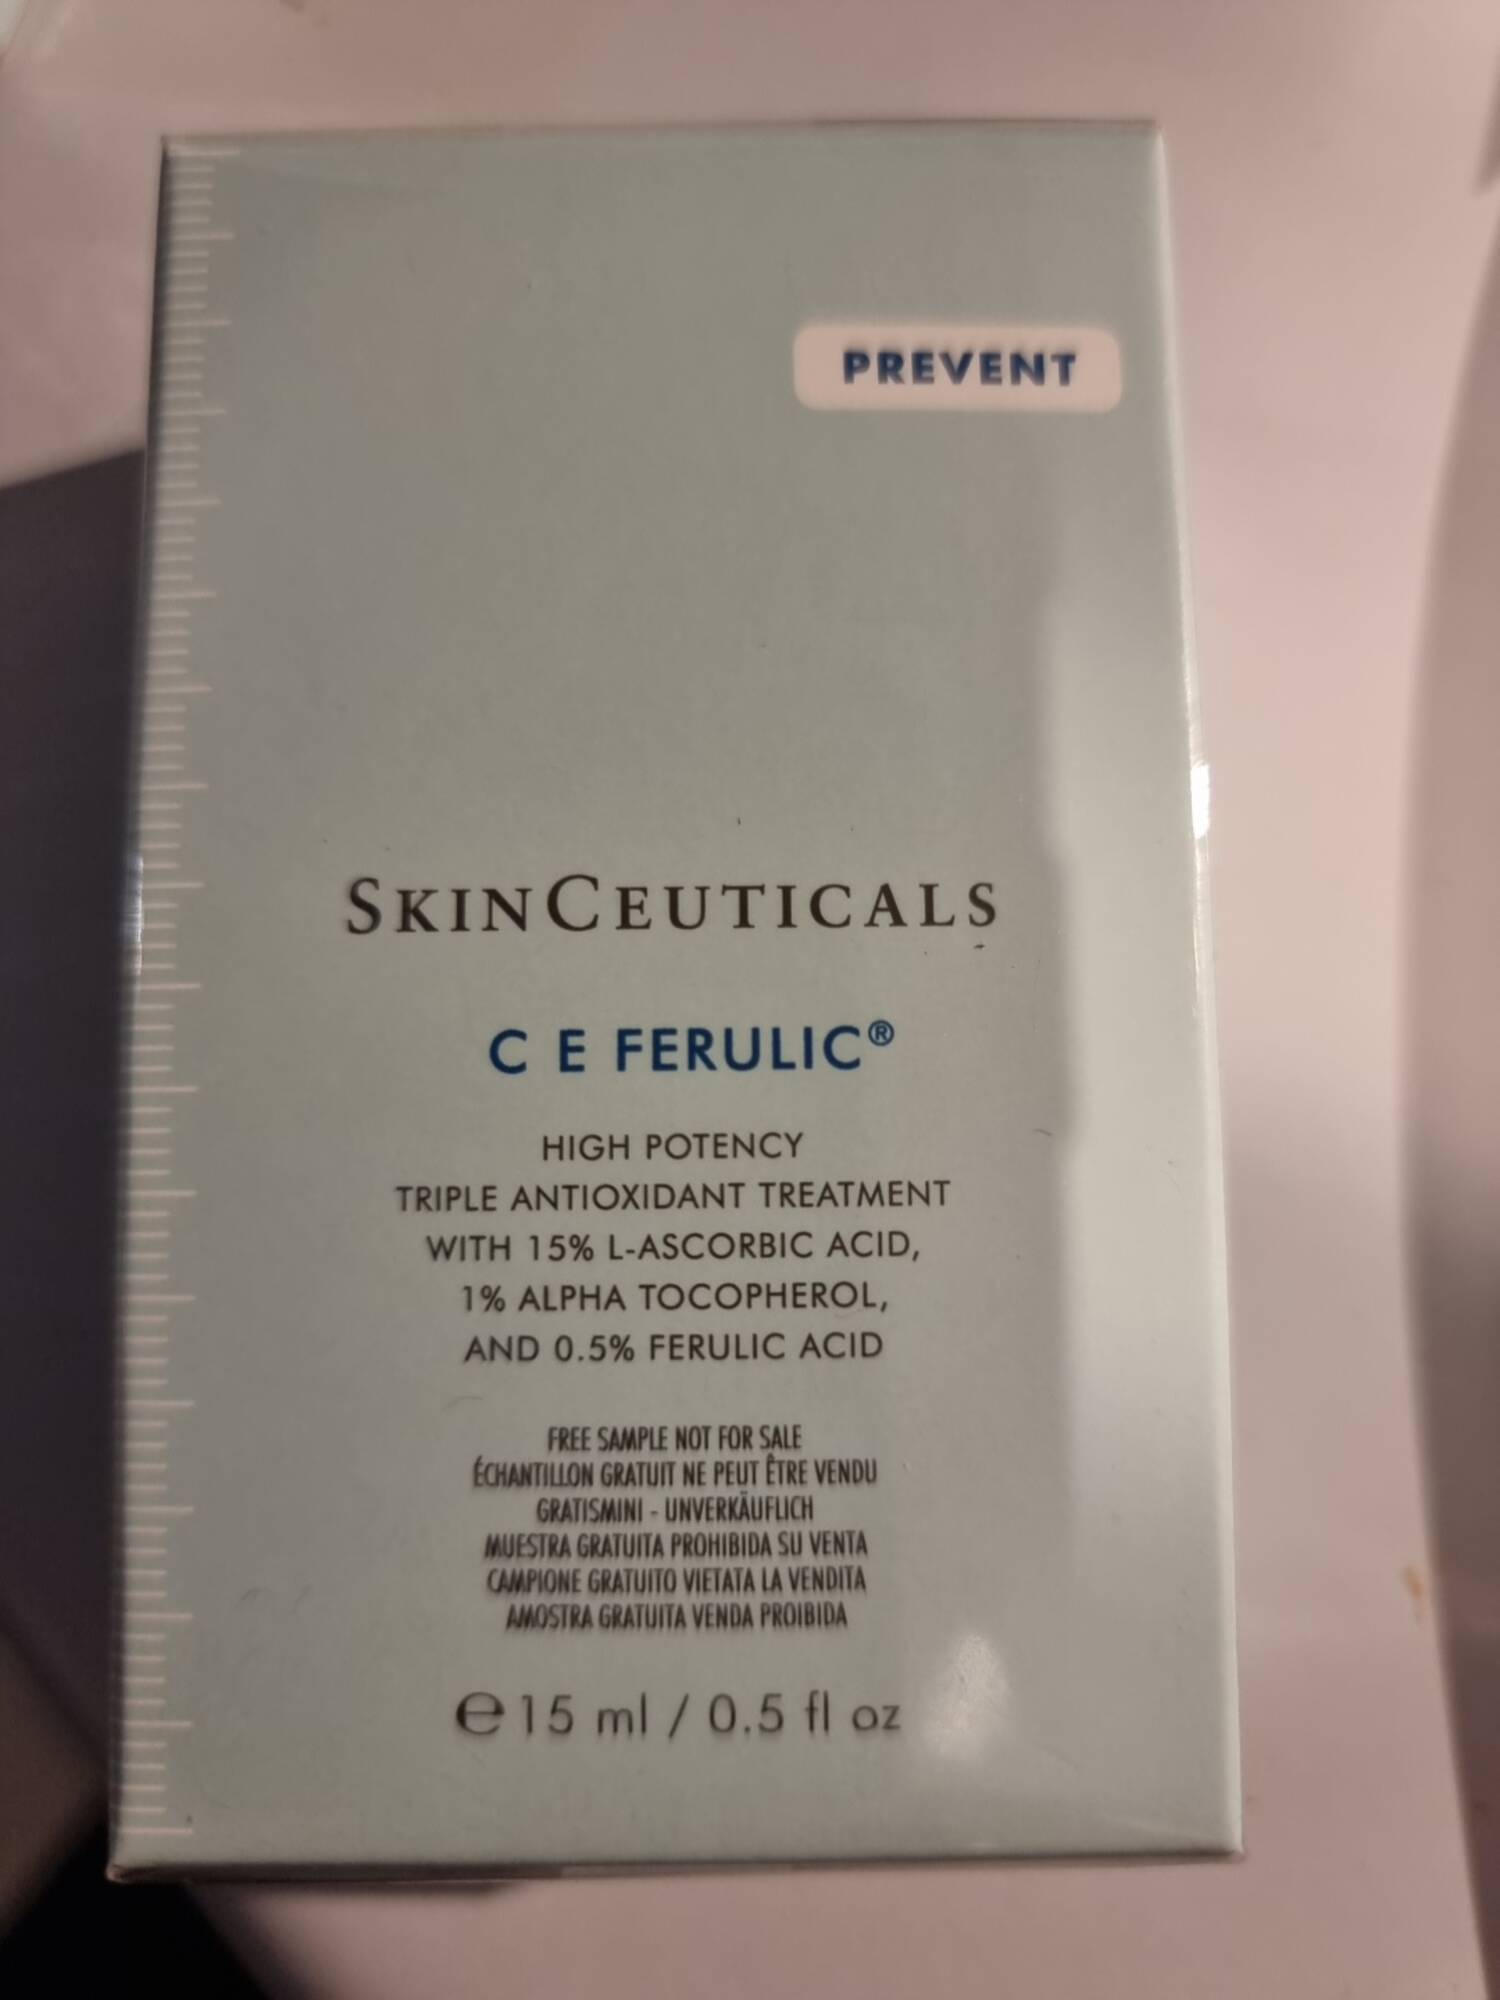 SKINCEUTICALS - C E ferulic - High potency triple antioxidant treatment